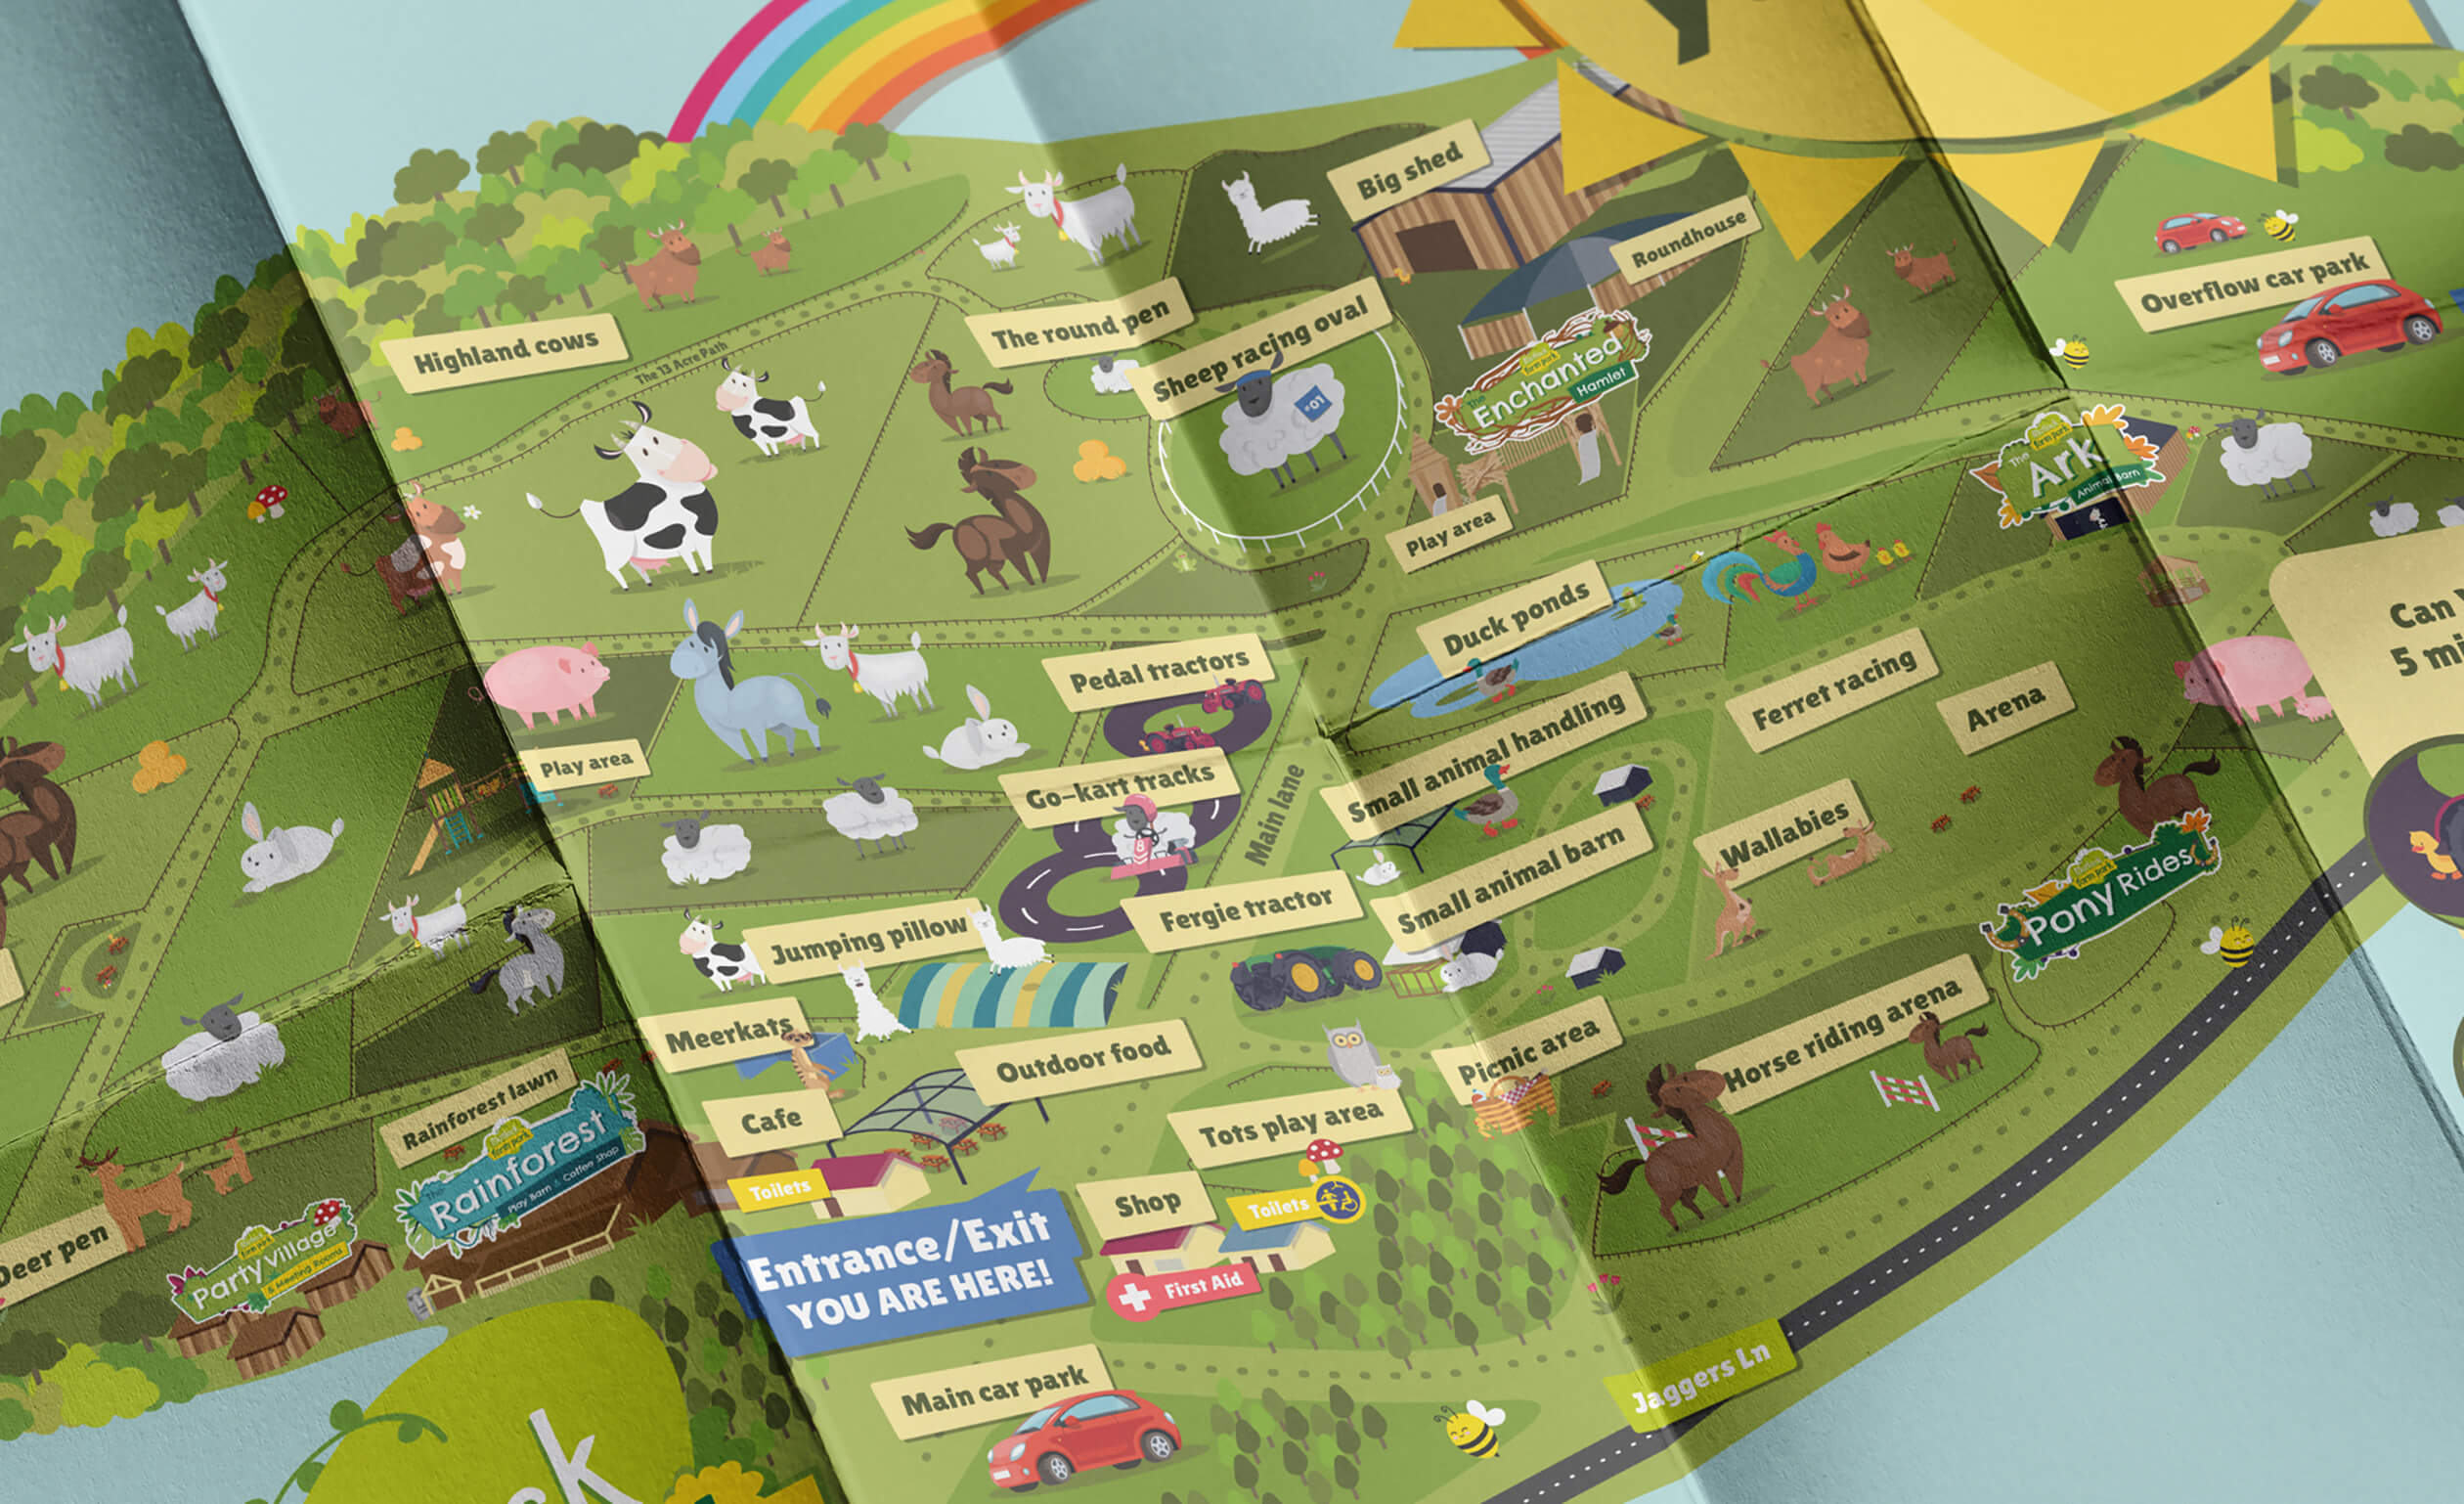 Matlock Farm Park Map